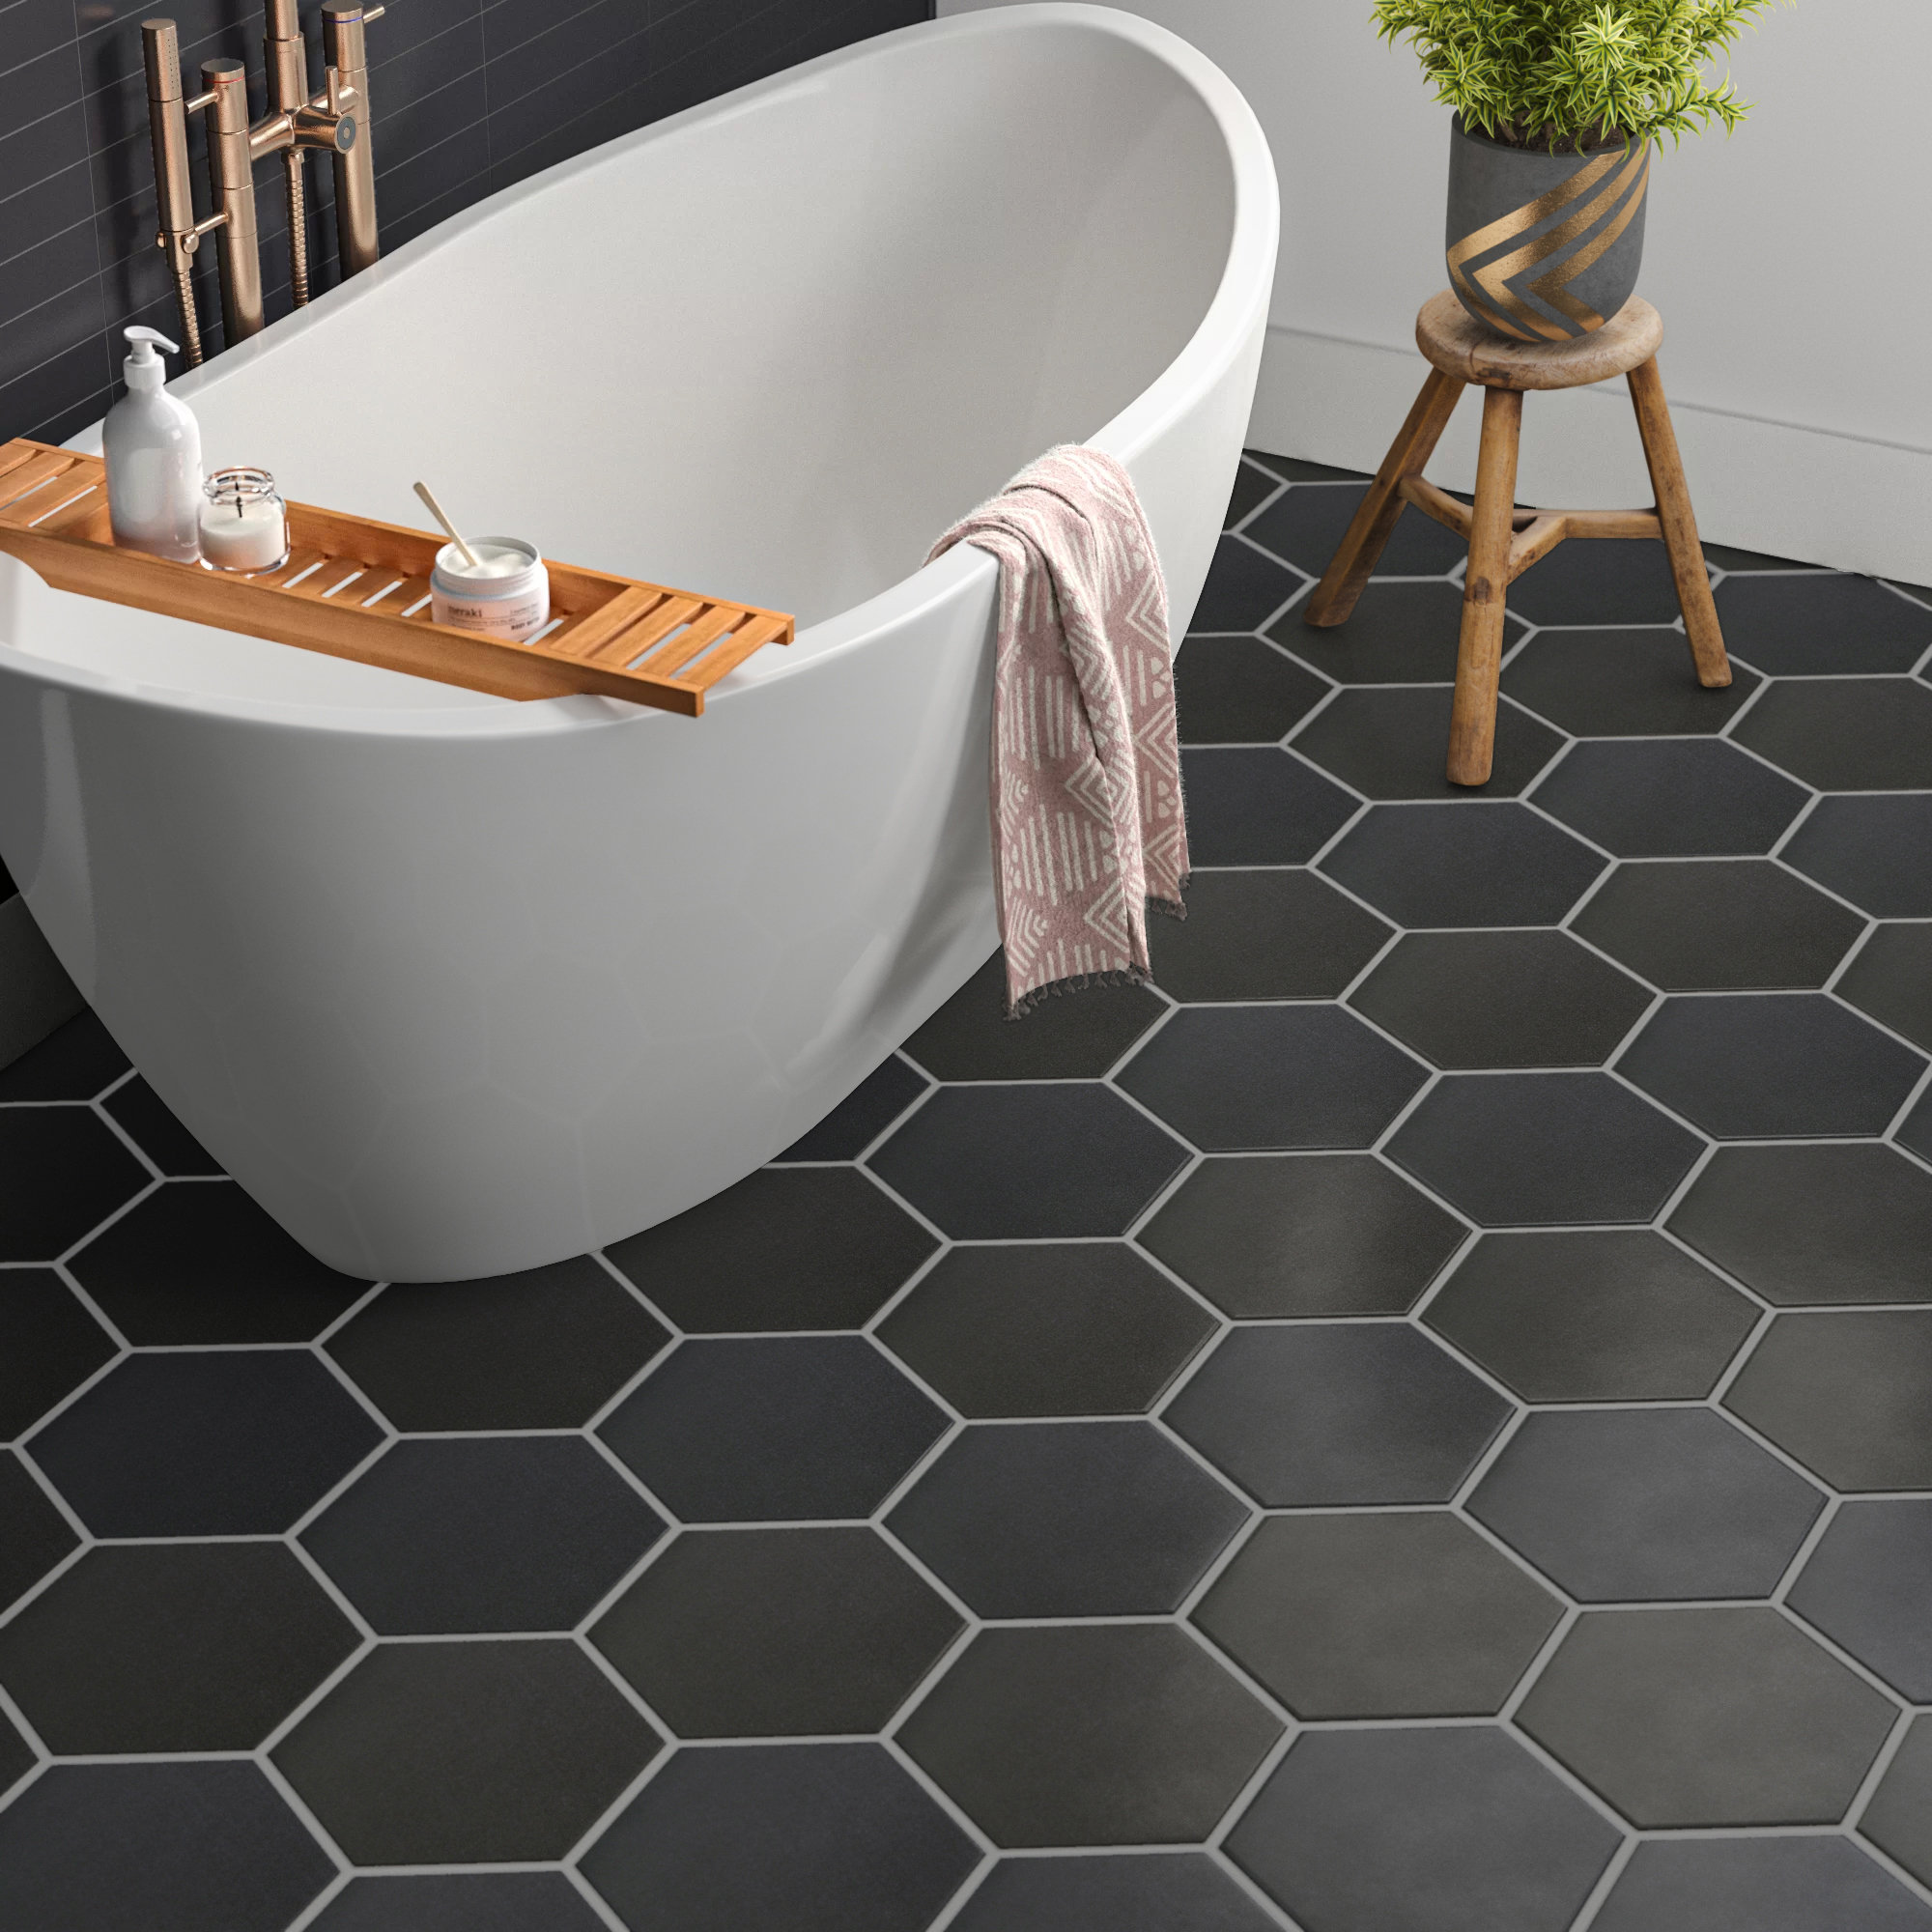 Wayfair | Gray Bathroom Tile You'll Love in 2022